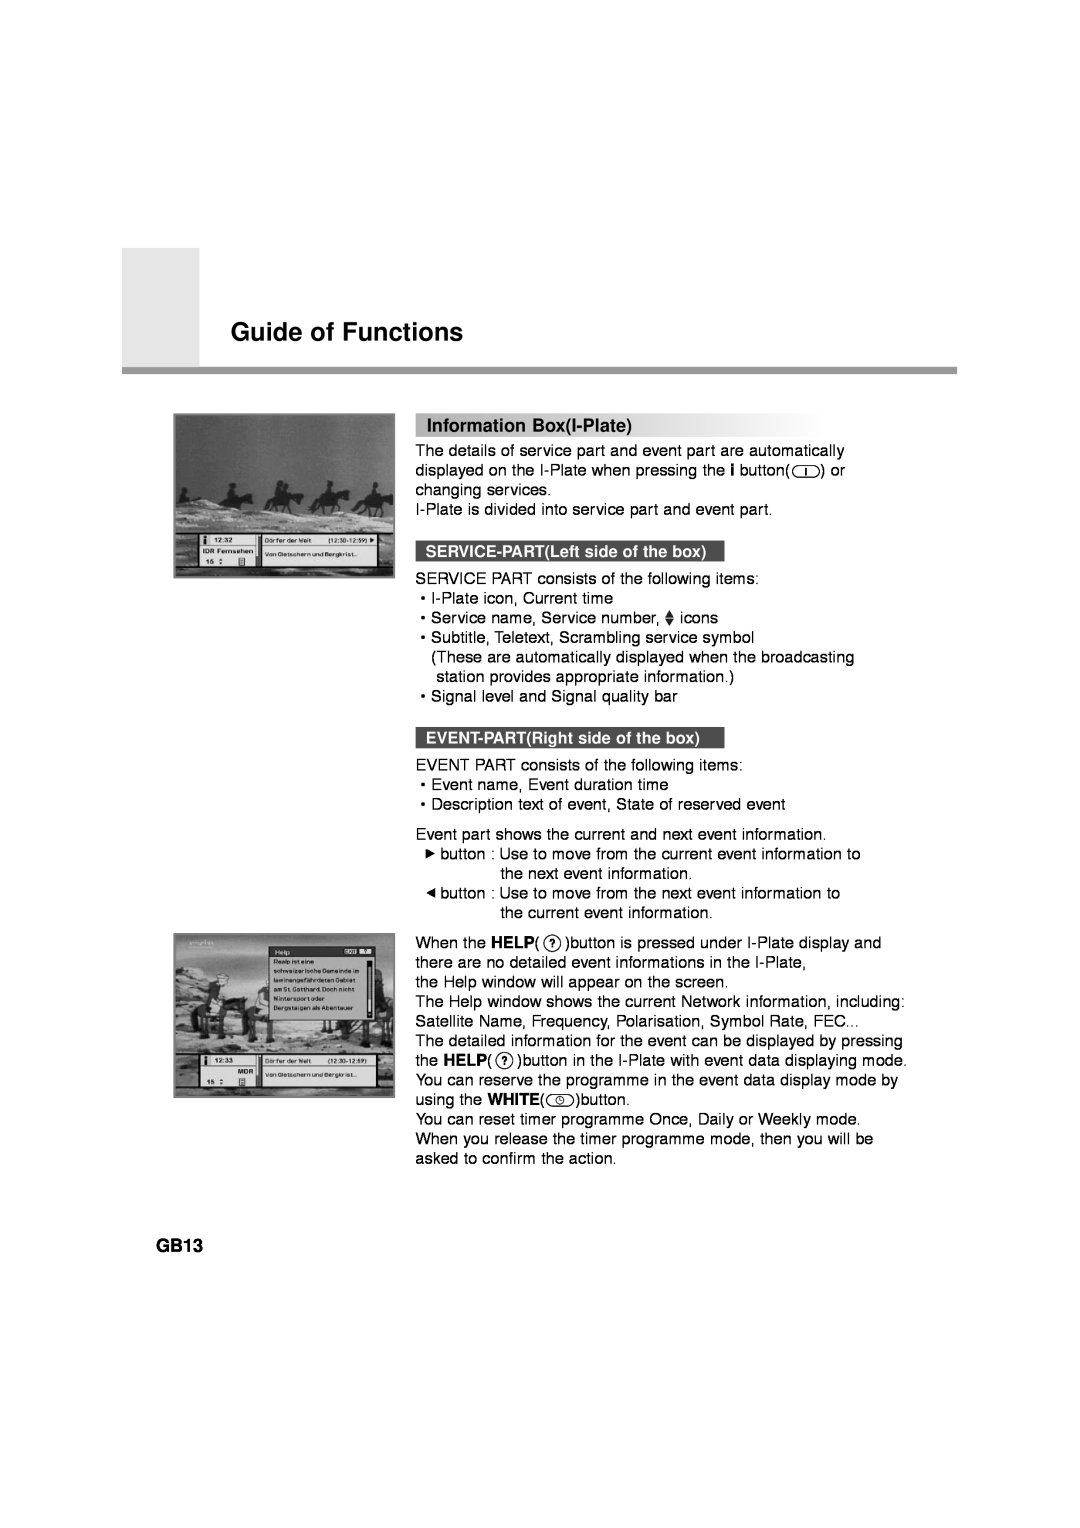 Humax VA-FOX, F1-FOX, NA-FOX, CA-FOX manual Guide of Functions, Information BoxI-Plate, GB13, SERVICE-PARTLeftside of the box 